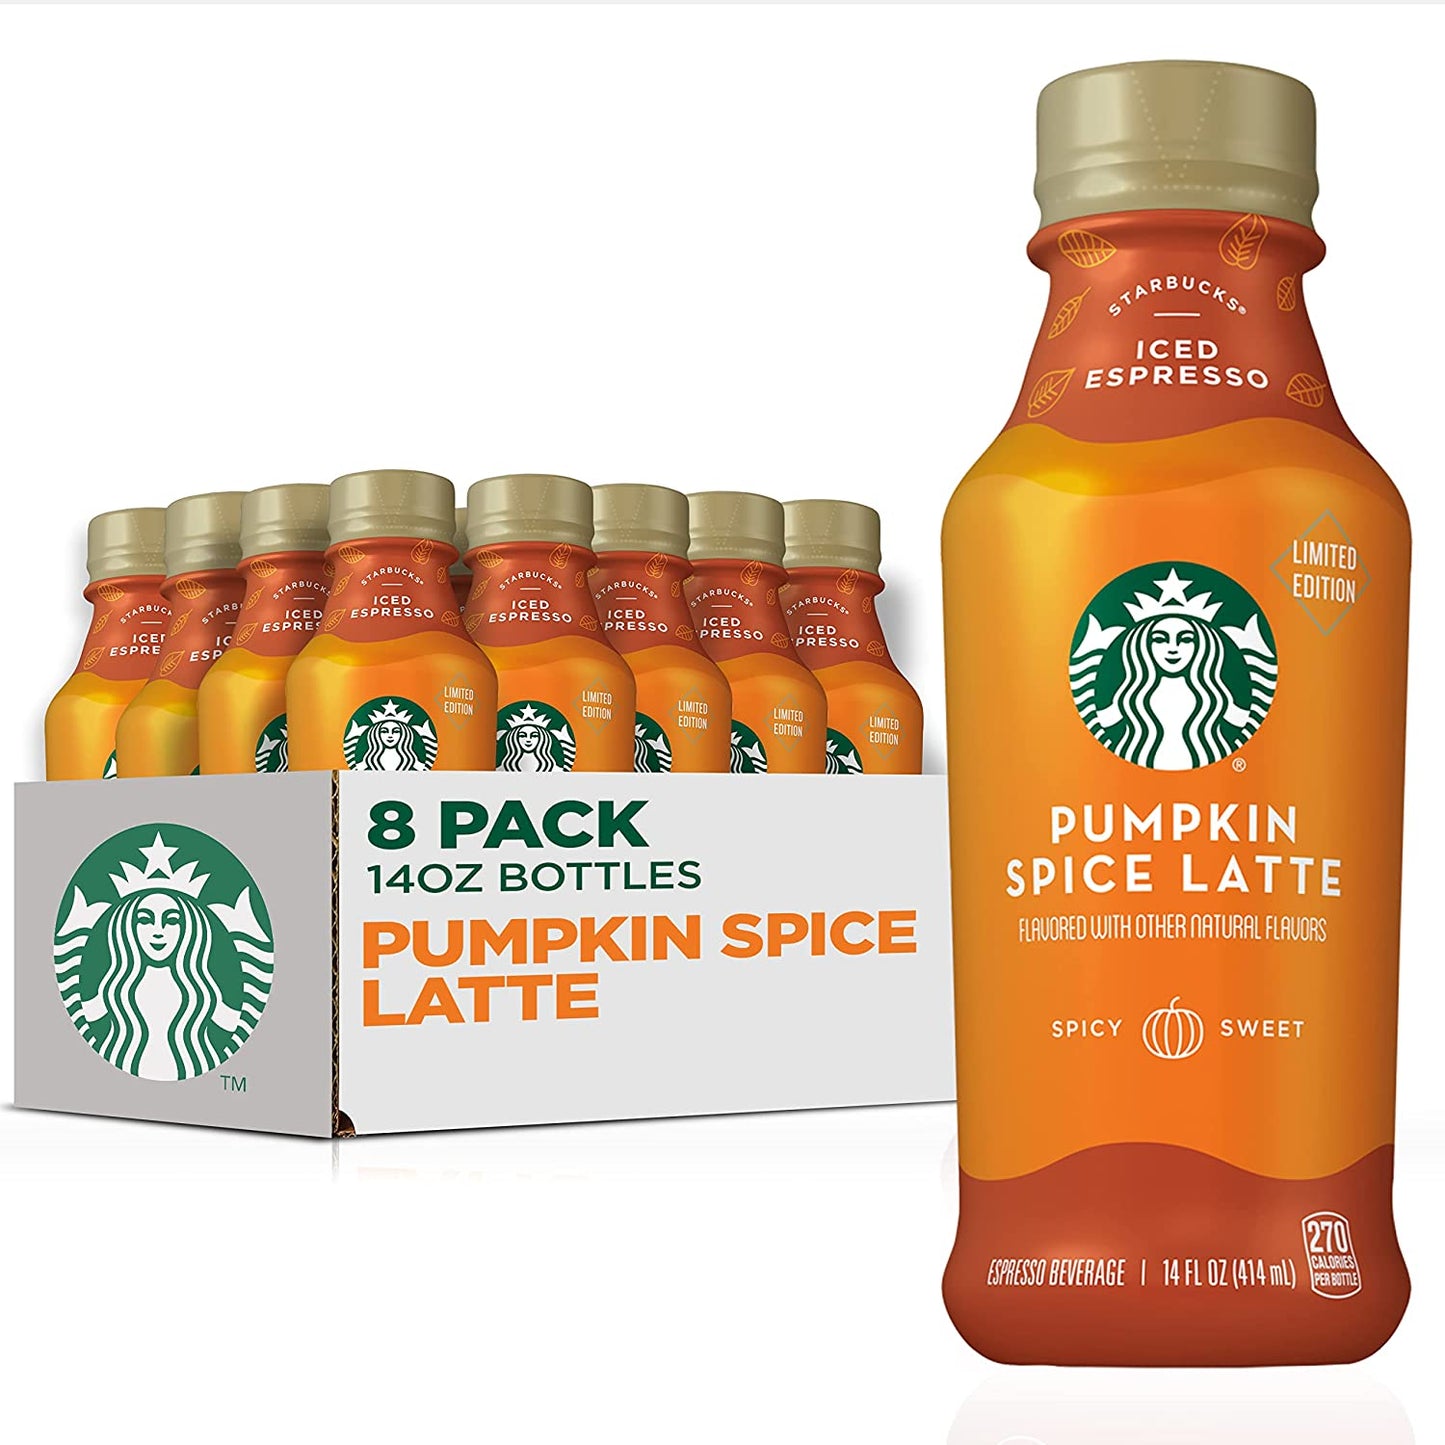 Starbucks Iced Espresso, Pumpkin Spice Latte, Limited Edition, 14 fl oz. Bottles (8 Pack)